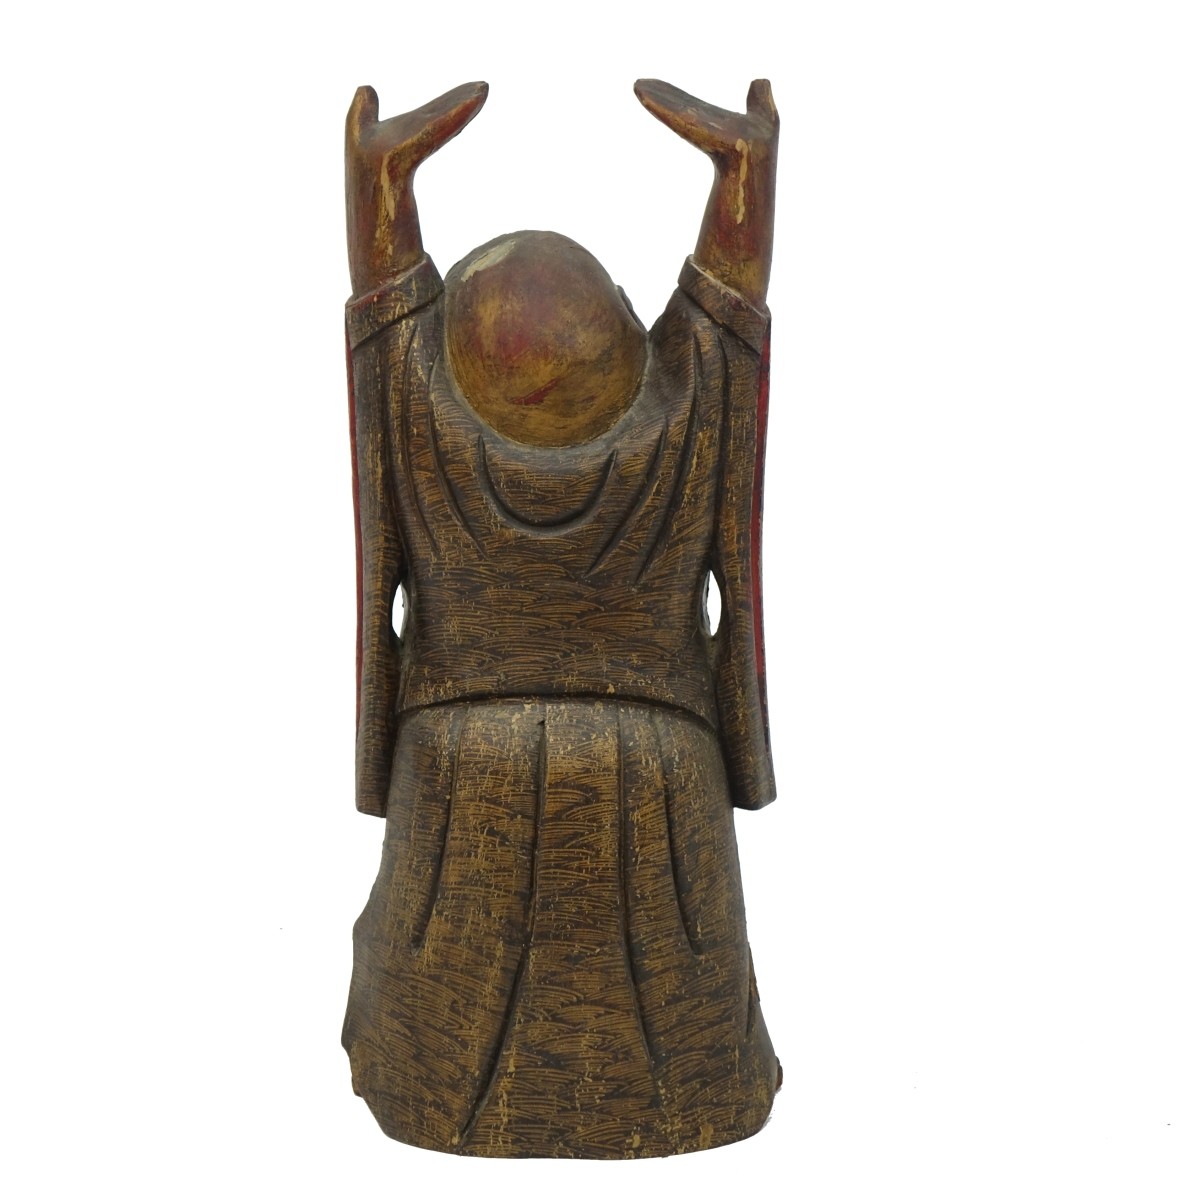 Vintage Chinese Hotei Buddha Figure